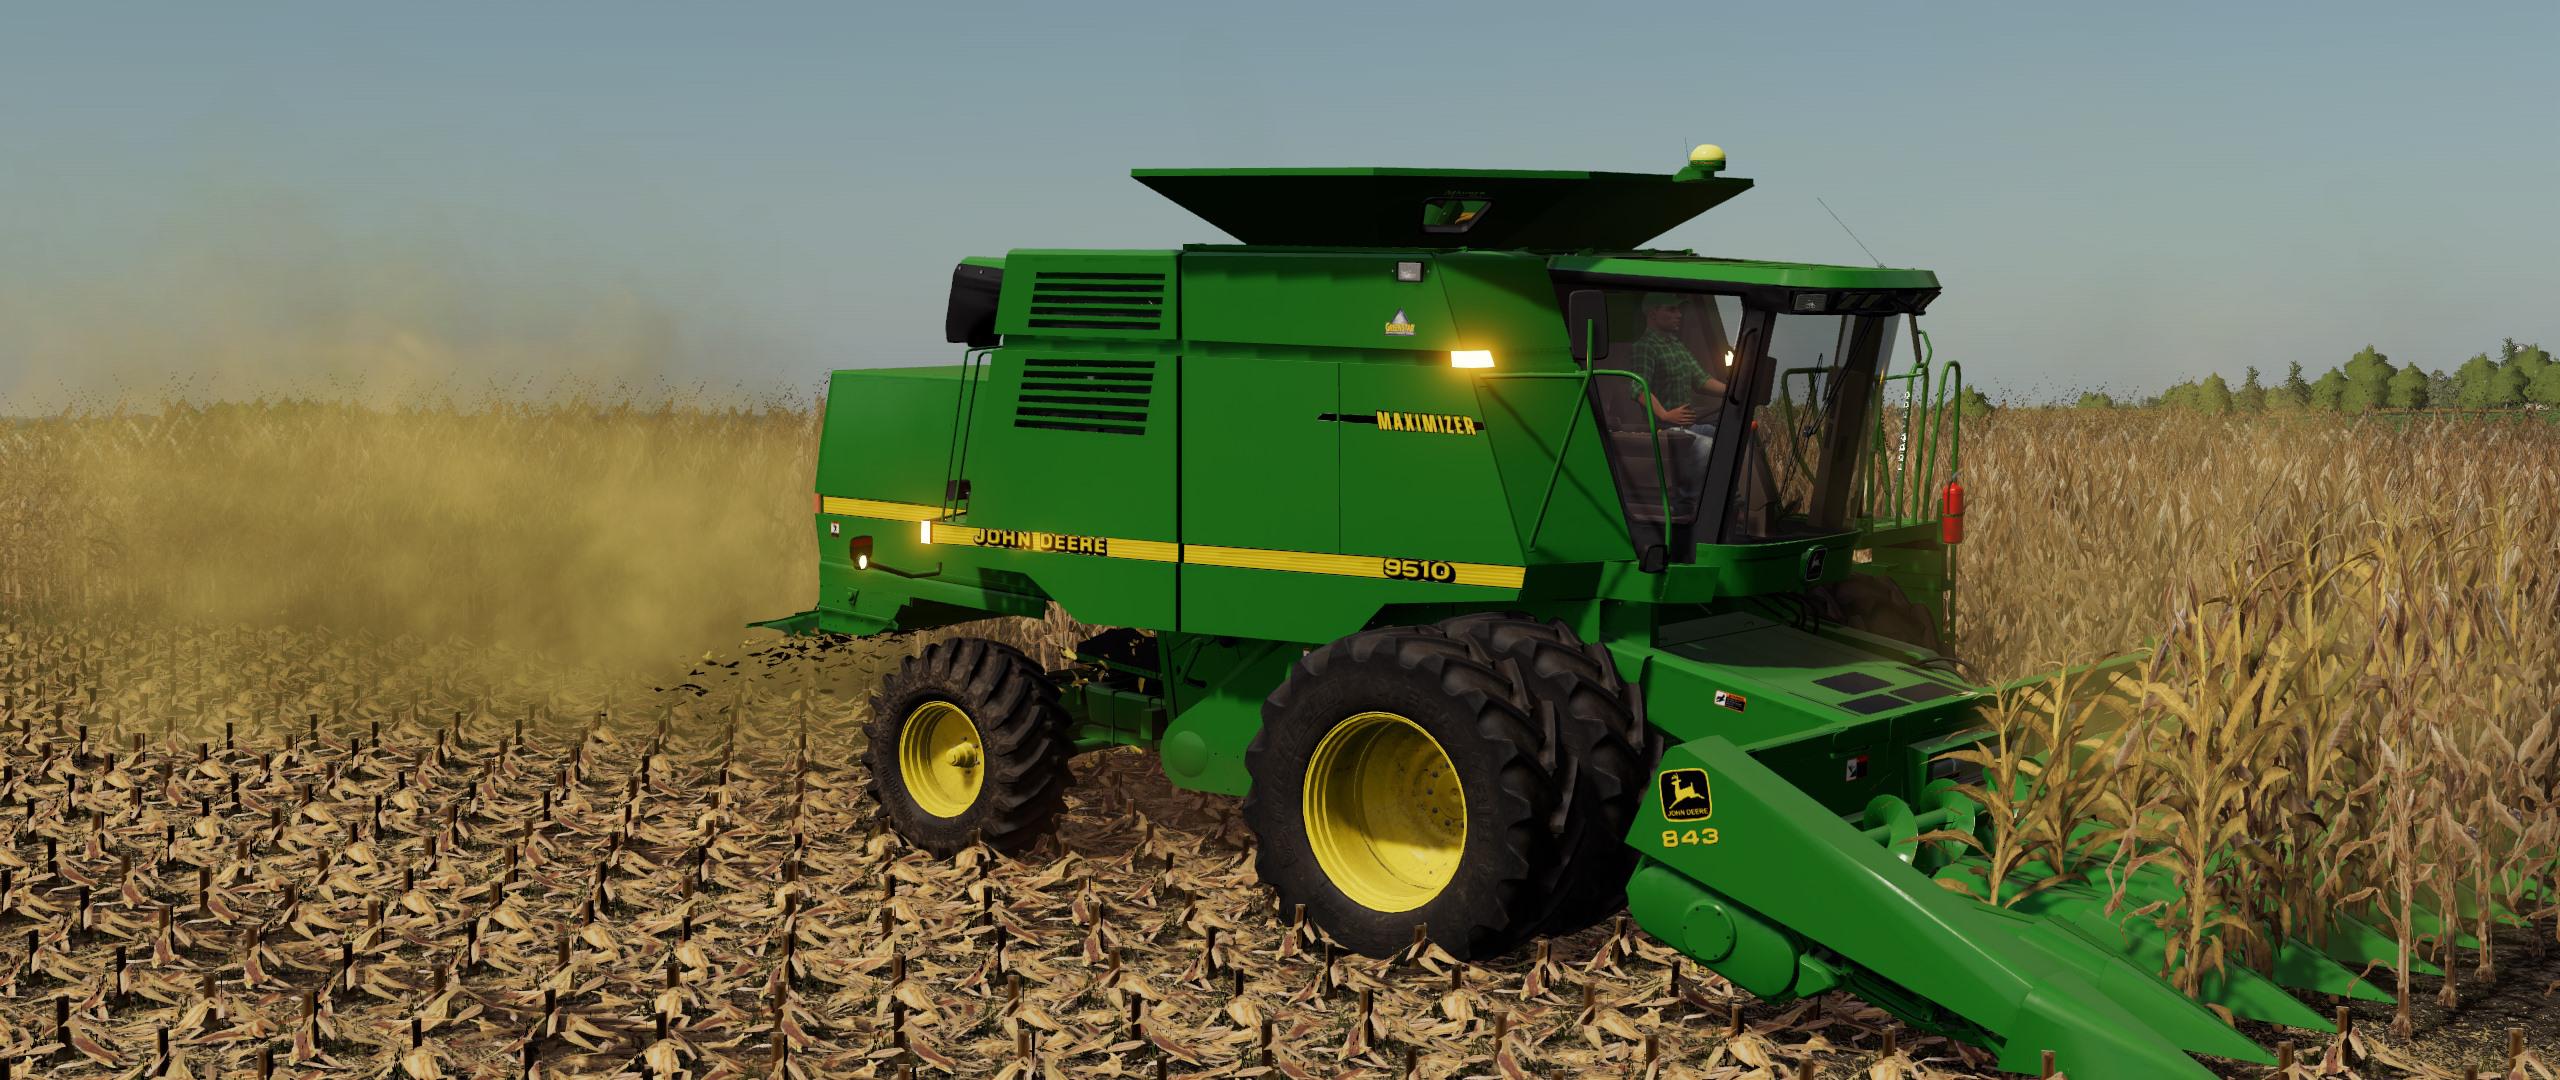 FS19 - John Deere 9400 - 9500 Harvester V1.0 | Farming Simulator 19 ...